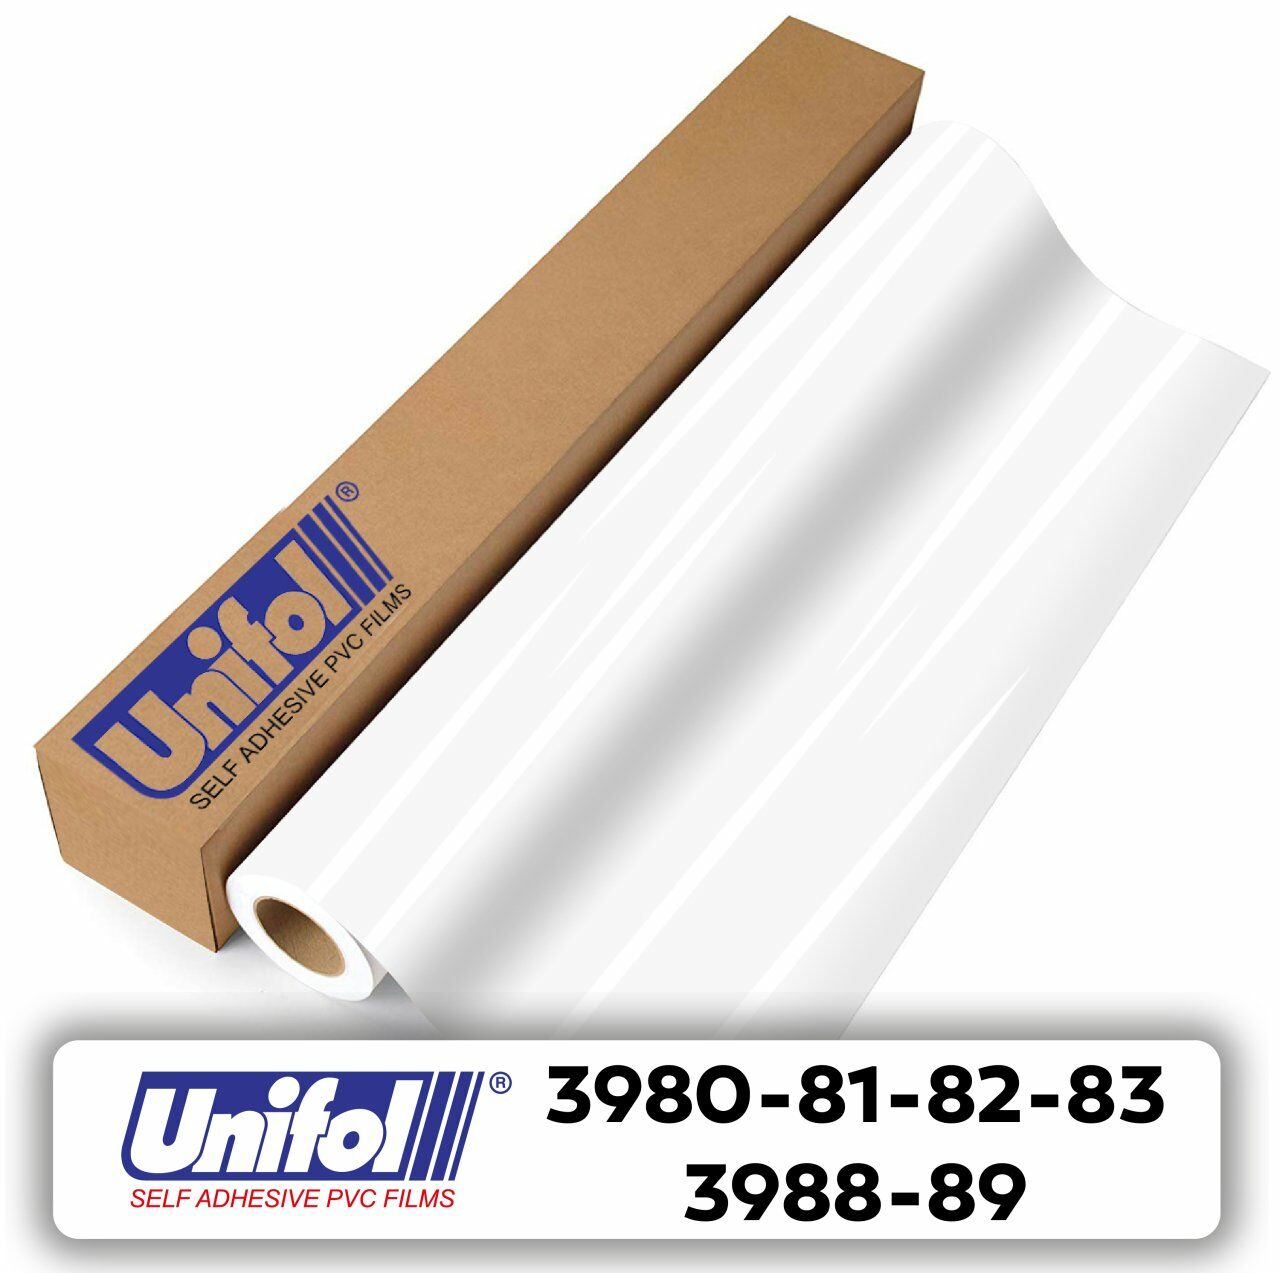 Unifol 3980-81-82-83 / 3988-89